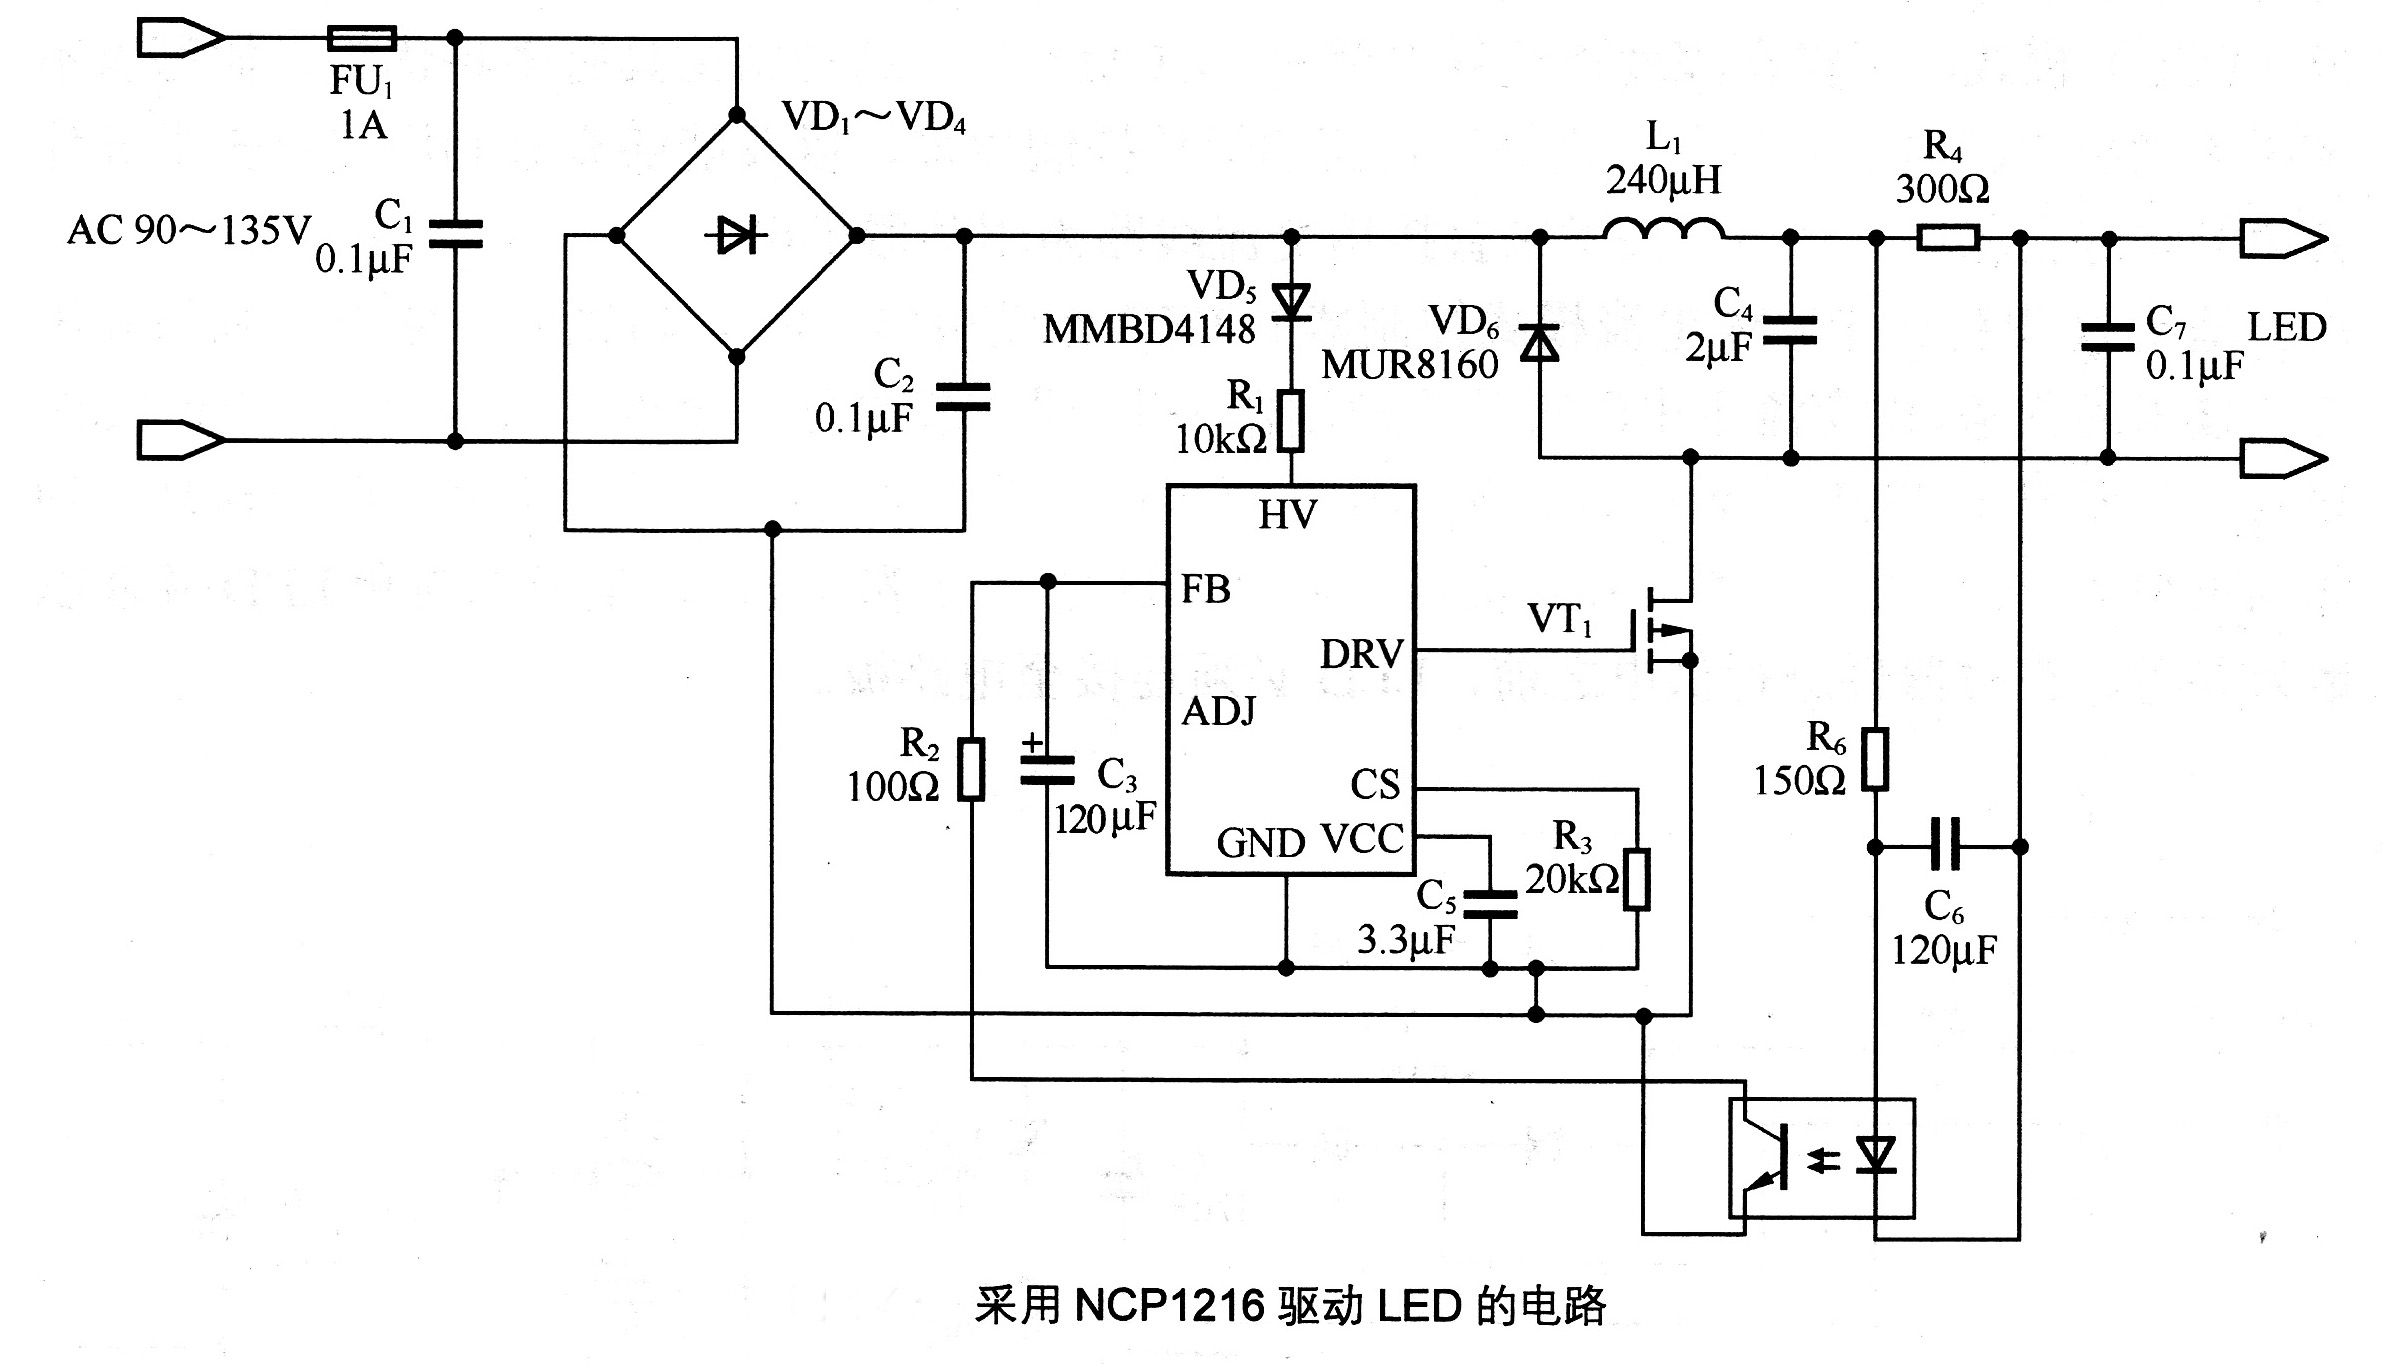 采用NCP1216驱动LED的电路